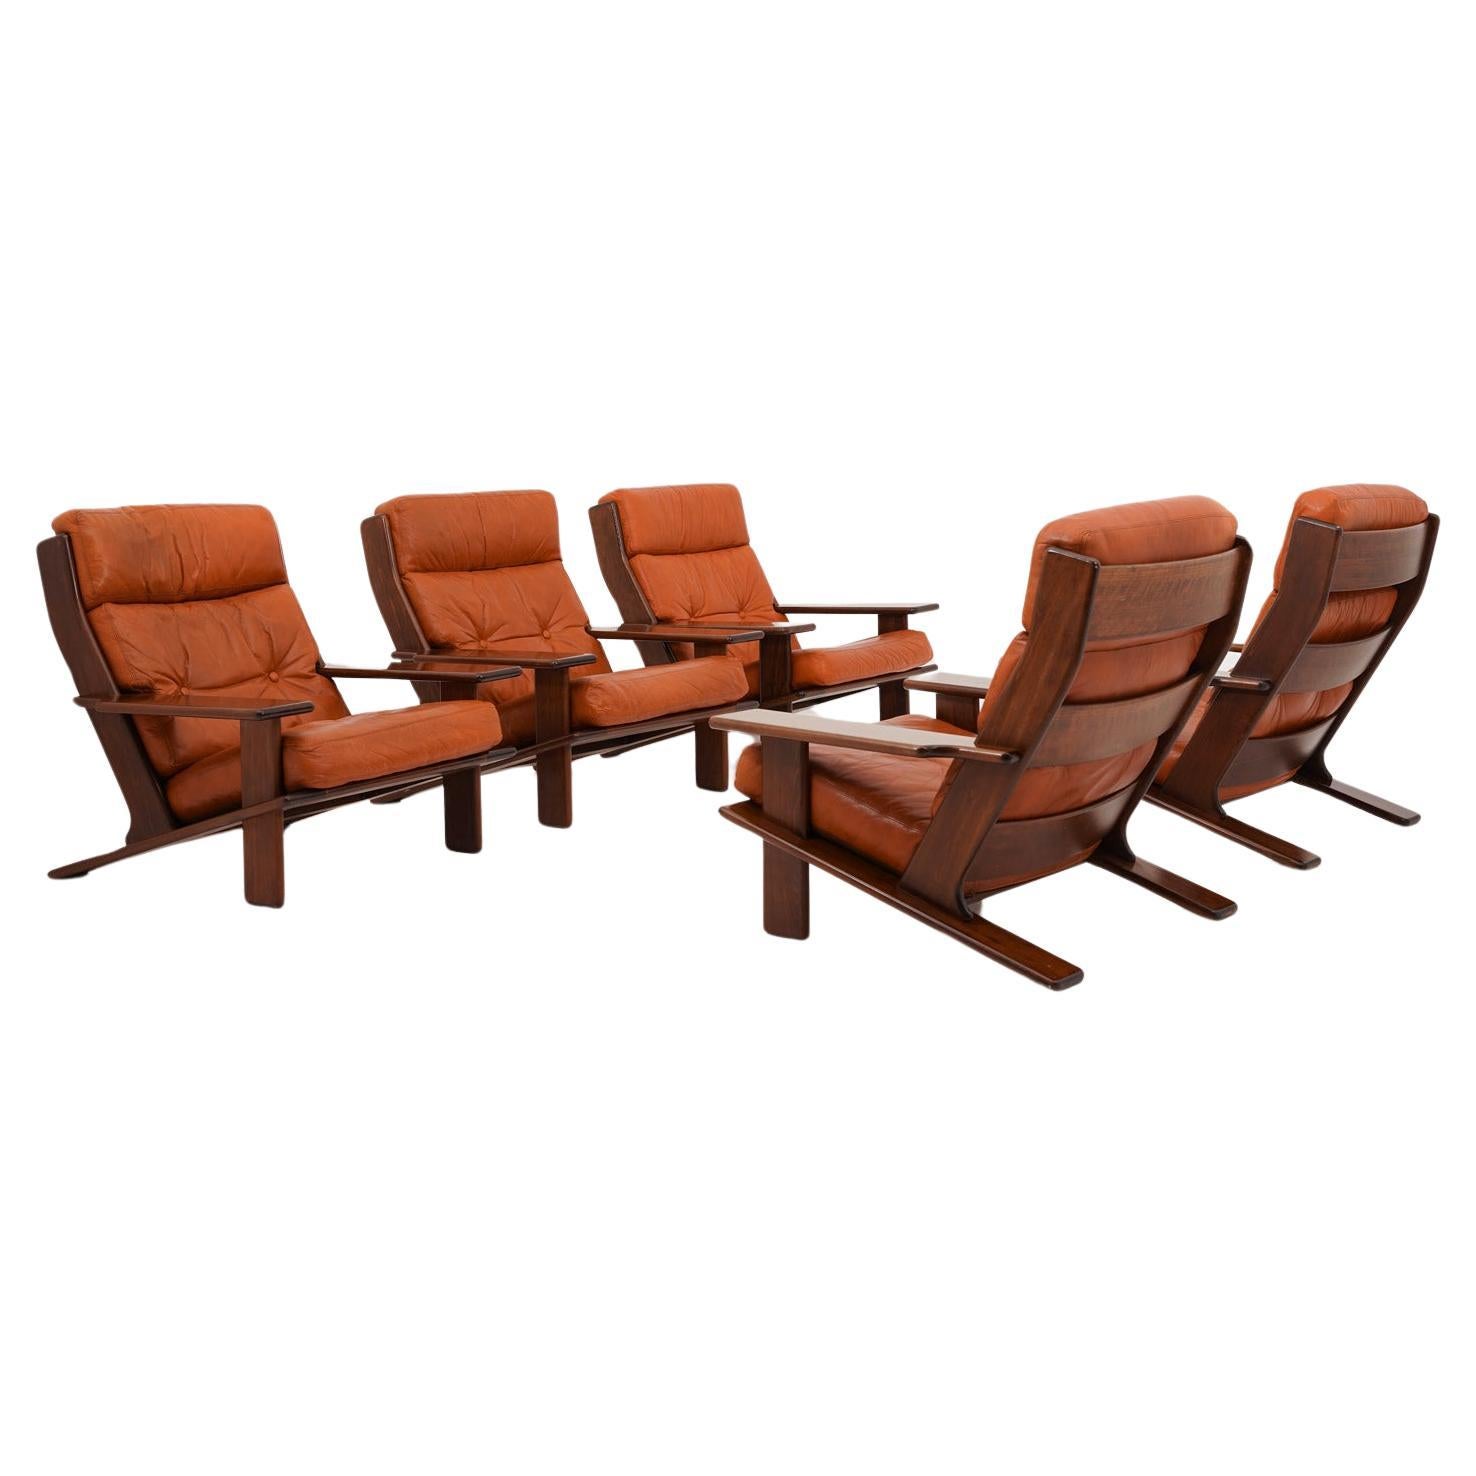 Scandinavian Lounge Chairs model 'Pele' by Esko Pajamies